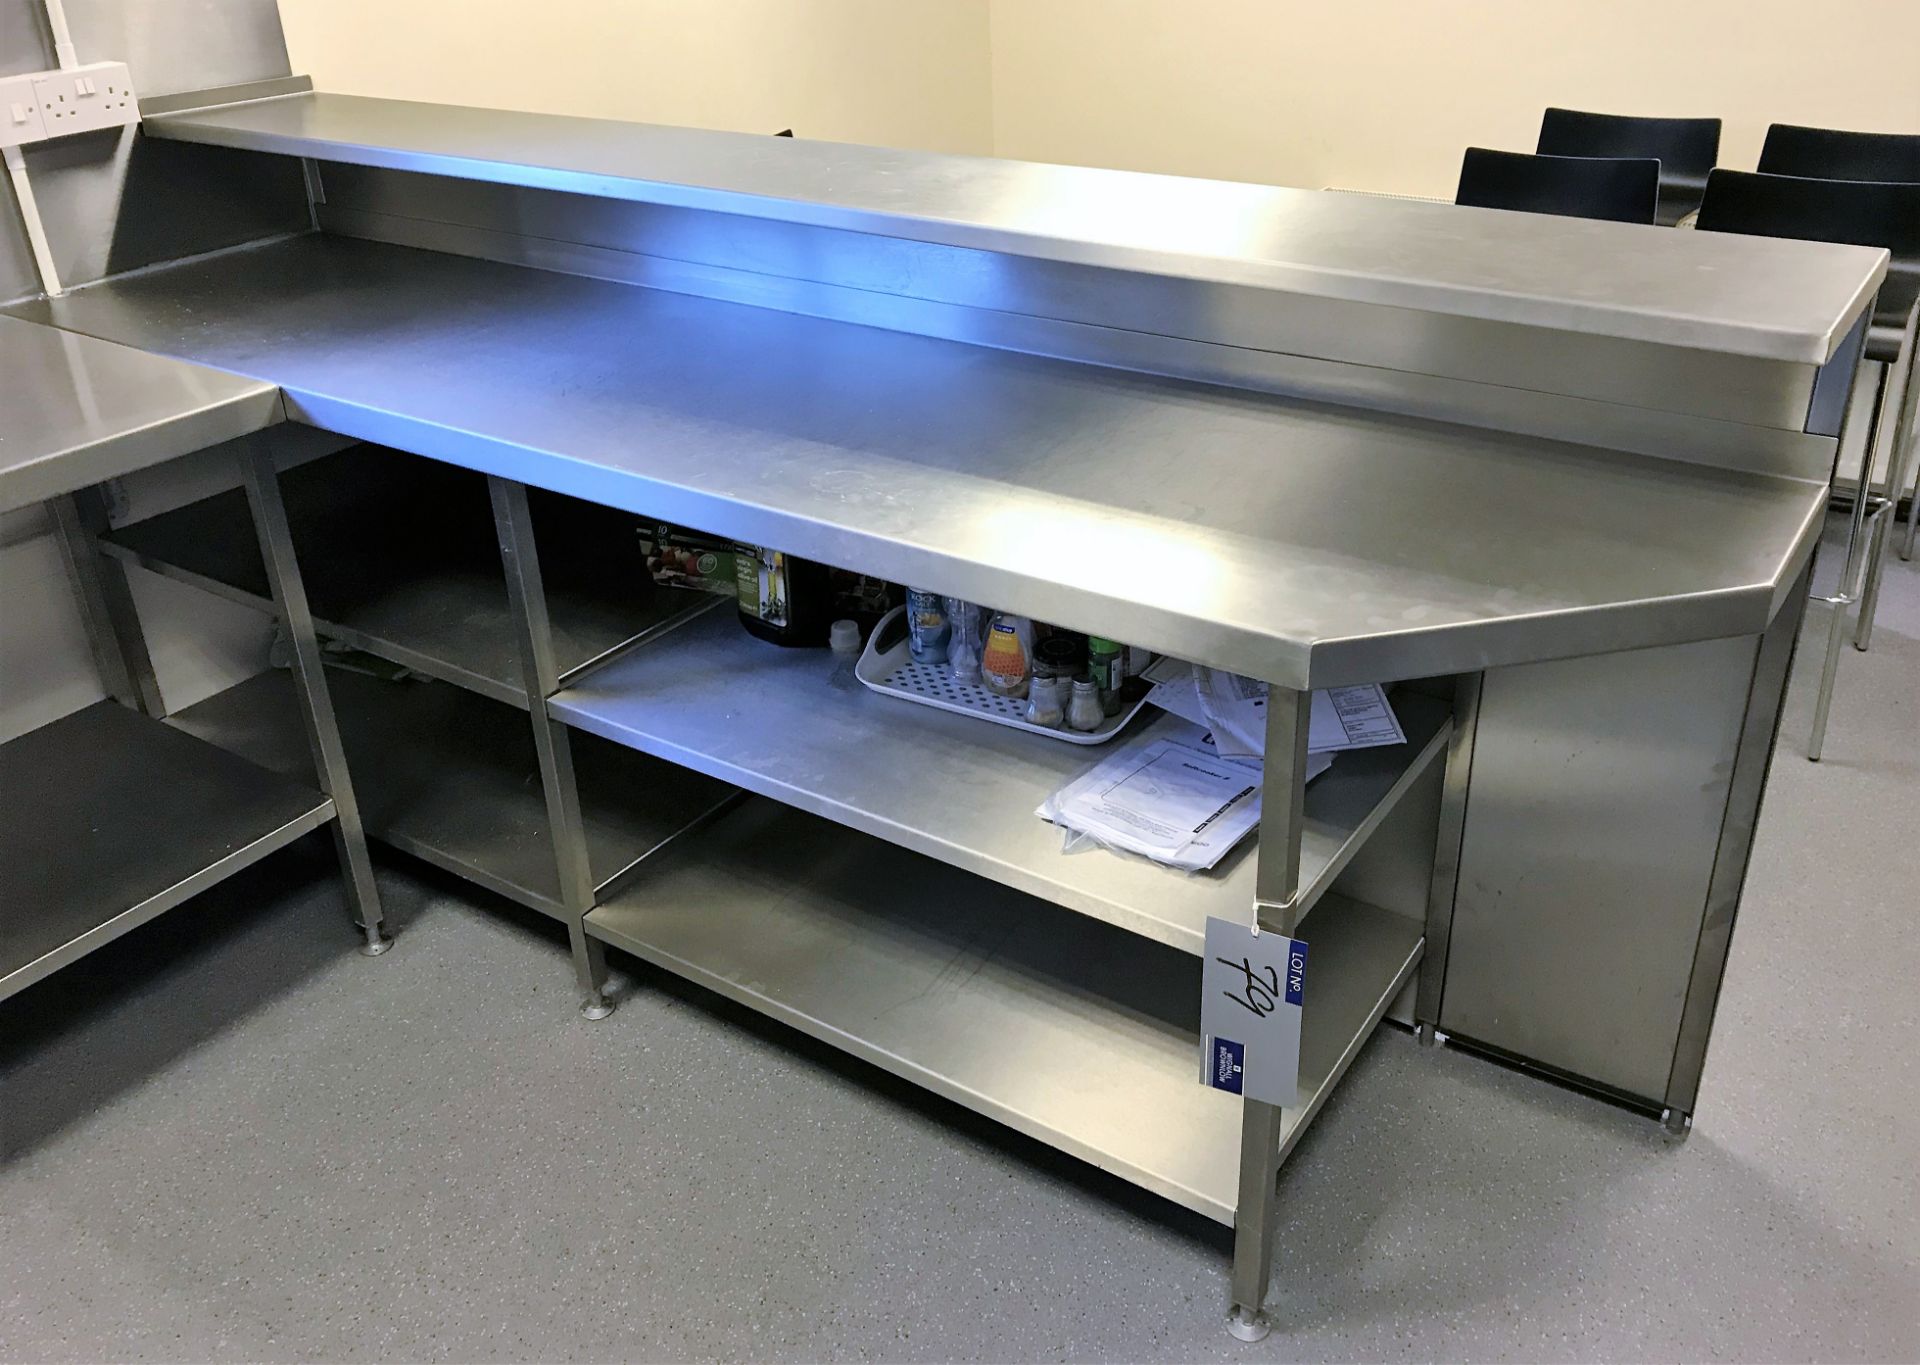 A Stainless Steel Servery with Multi Shelf Storage